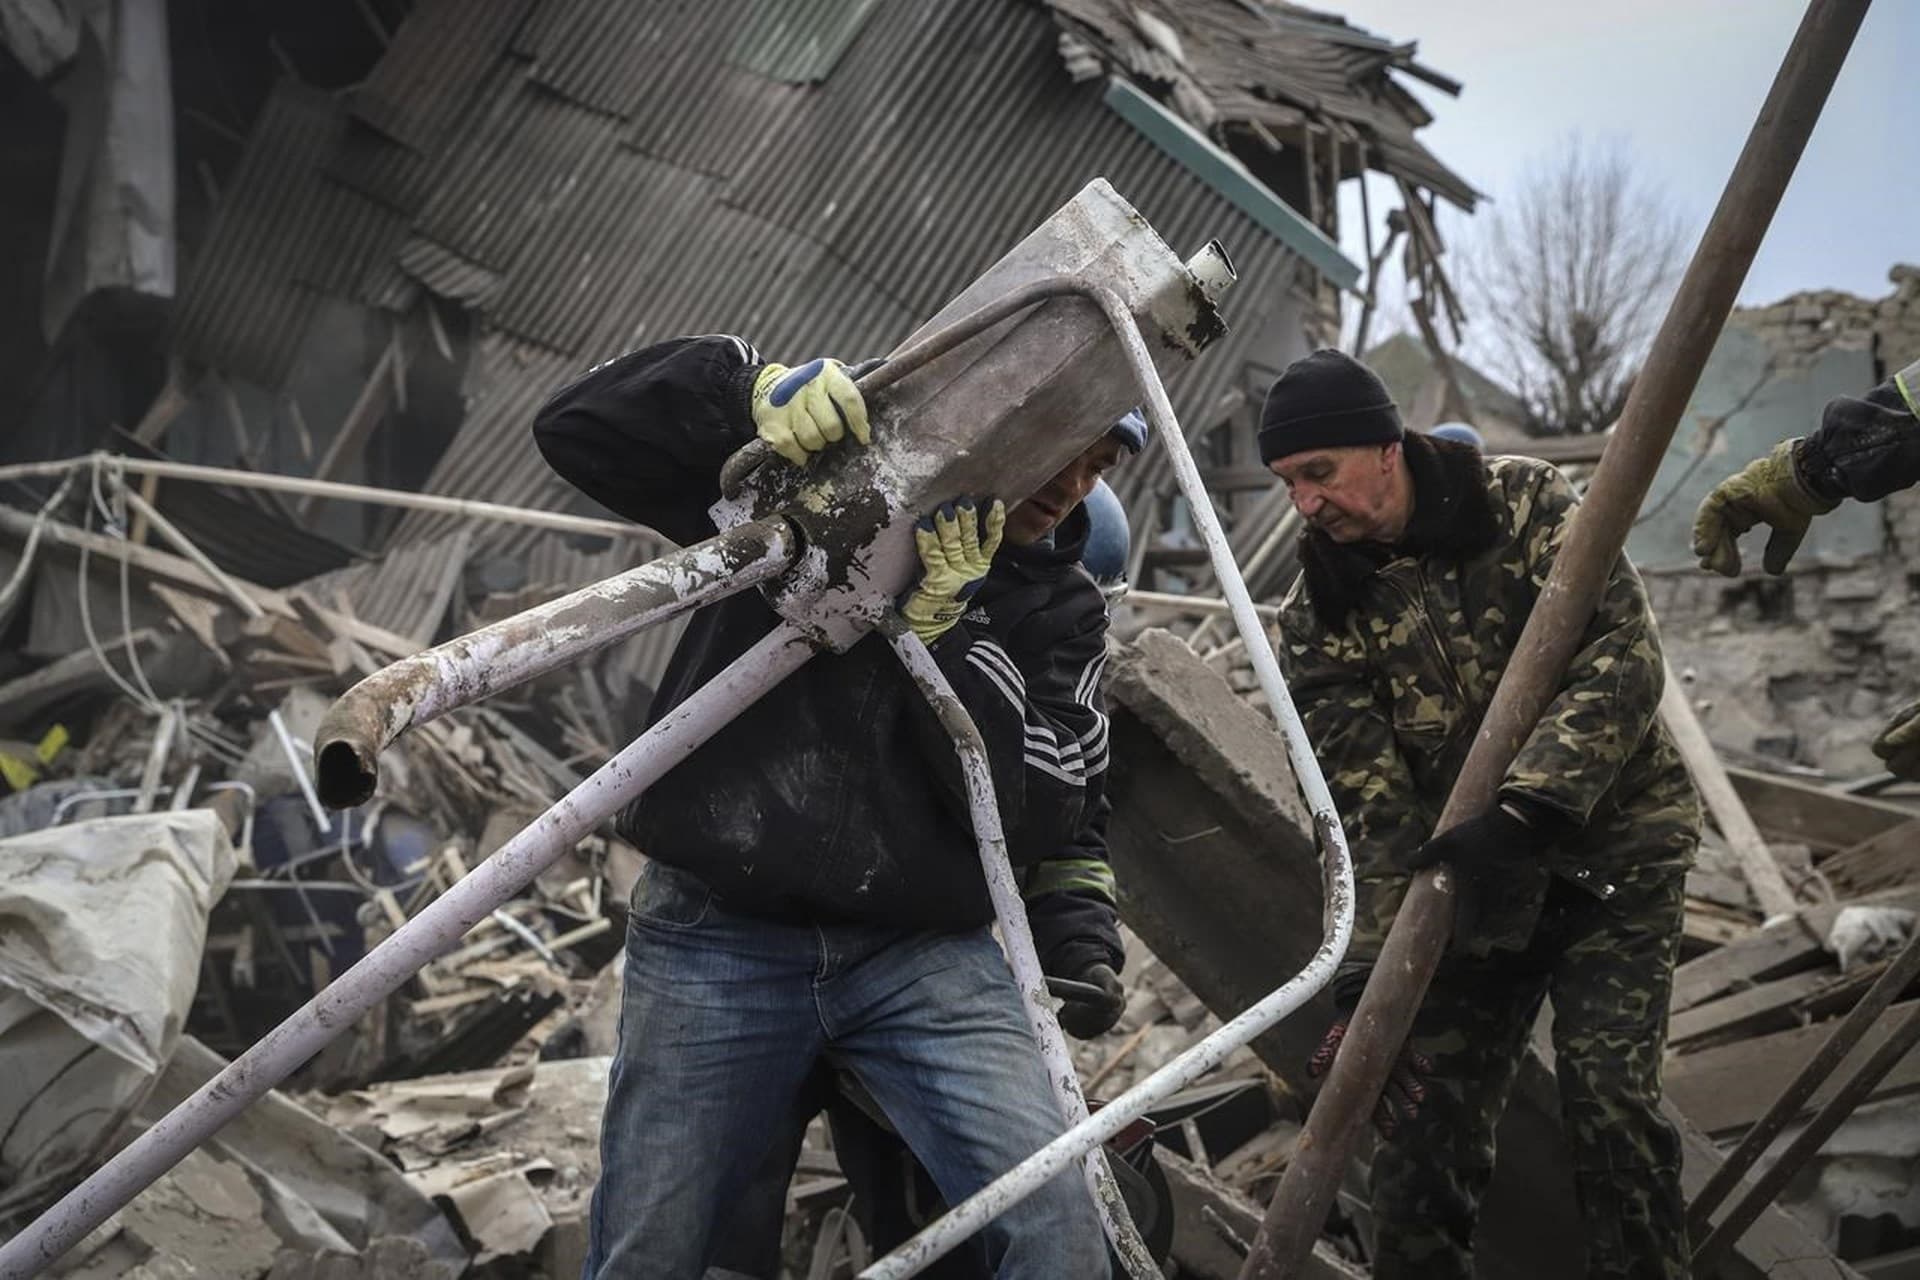 Ukrainian volunteers clear debris at a damaged maternity hospital in Vilniansk